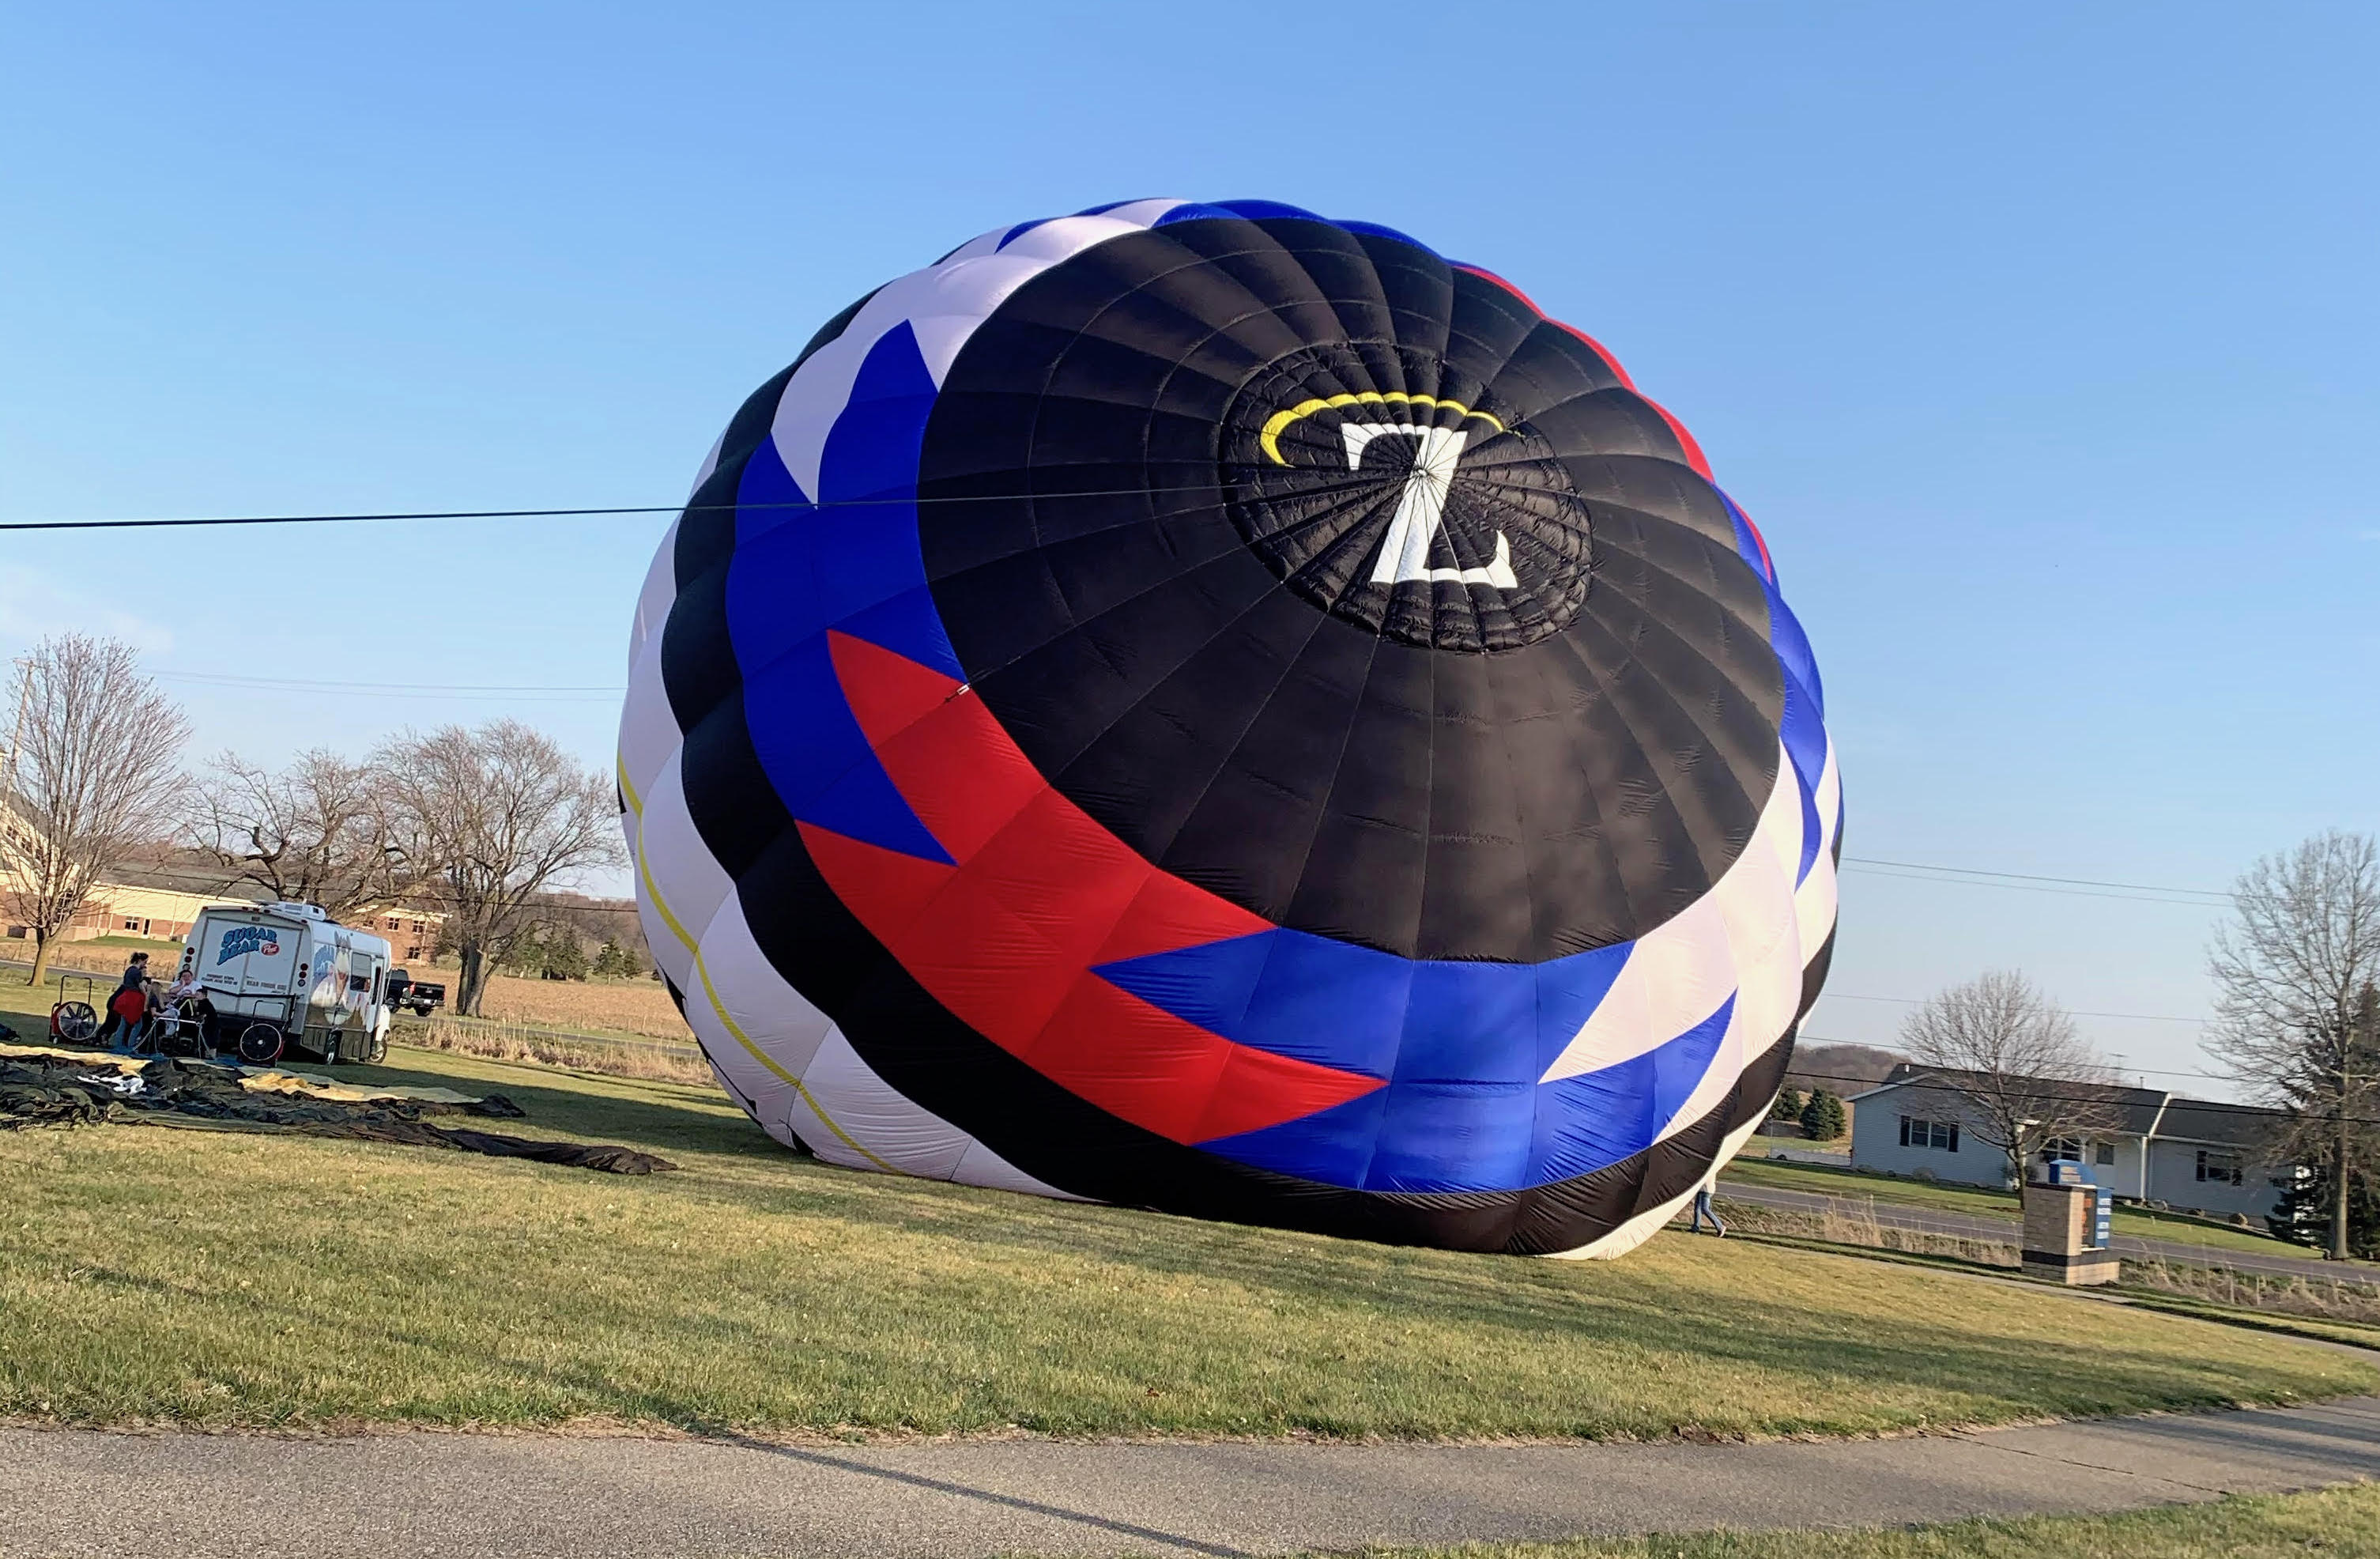 Zeigler Auto Group's Hot Air Balloon Touching Down After Easter Flight